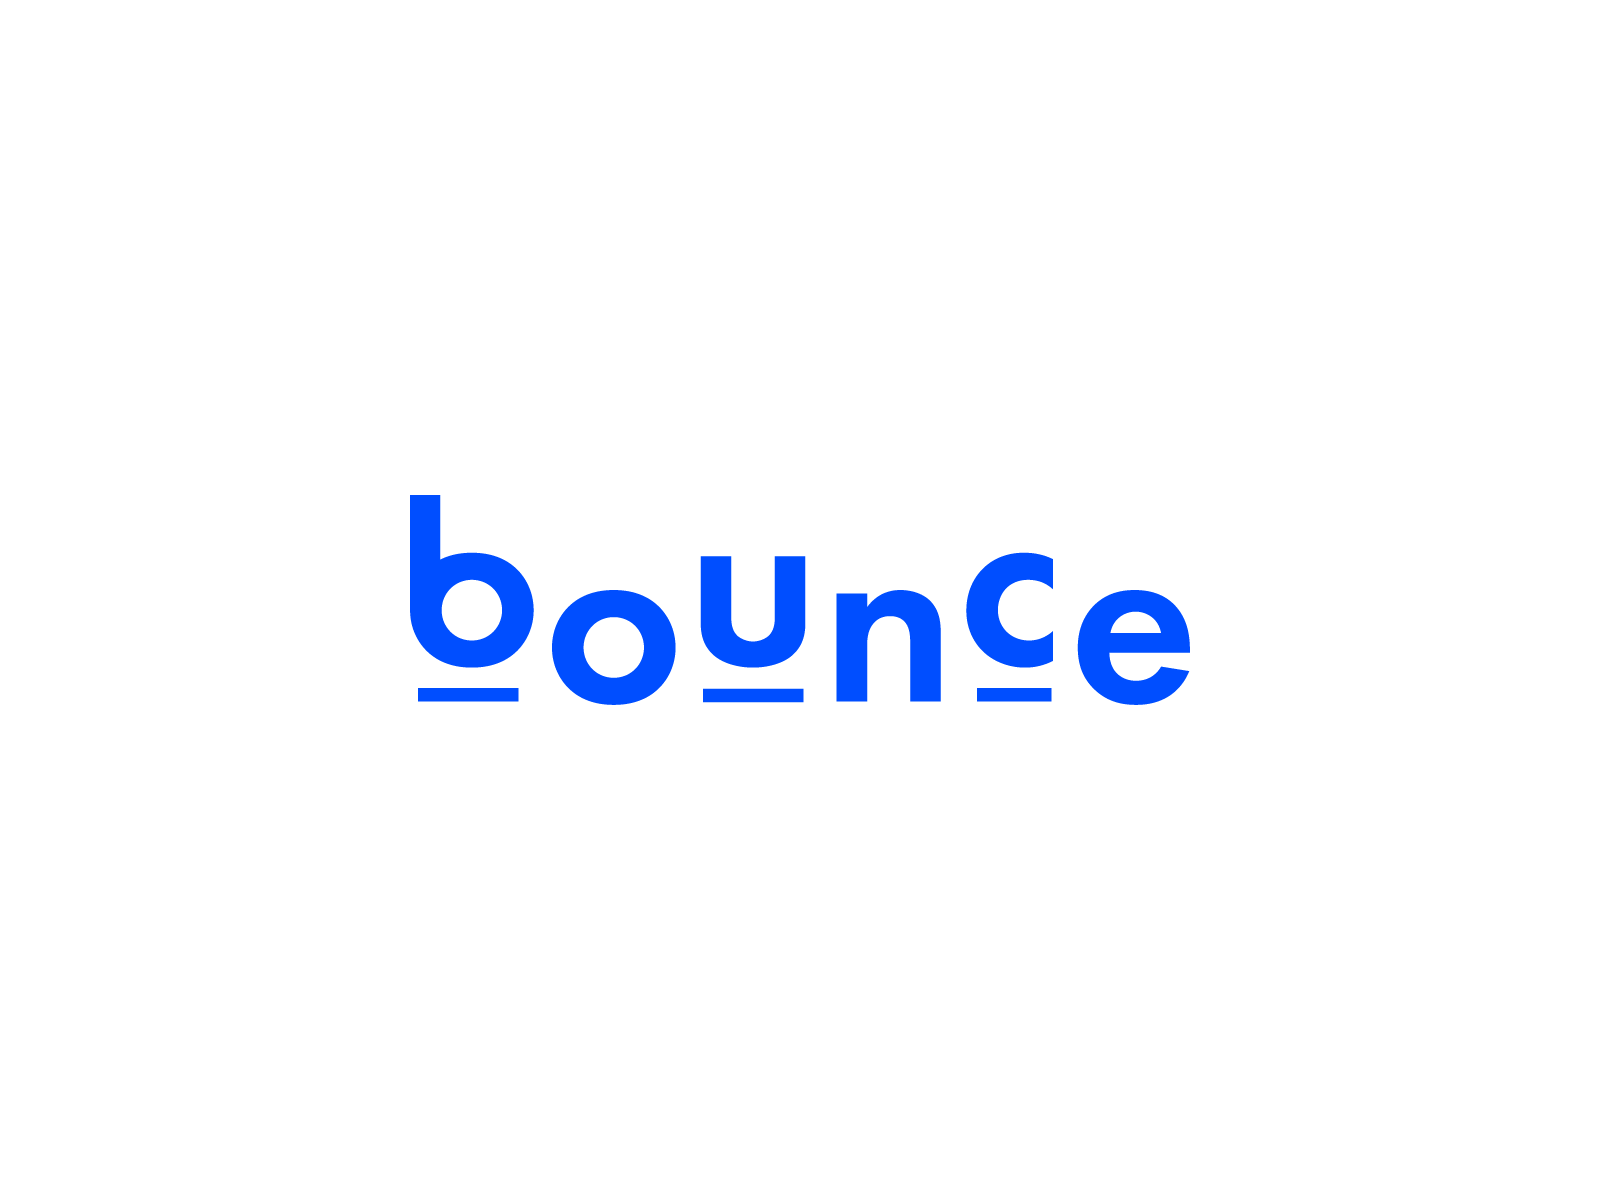 Bounce – DLC Day 34 – Social Media Website by Linnea S. on Dribbble